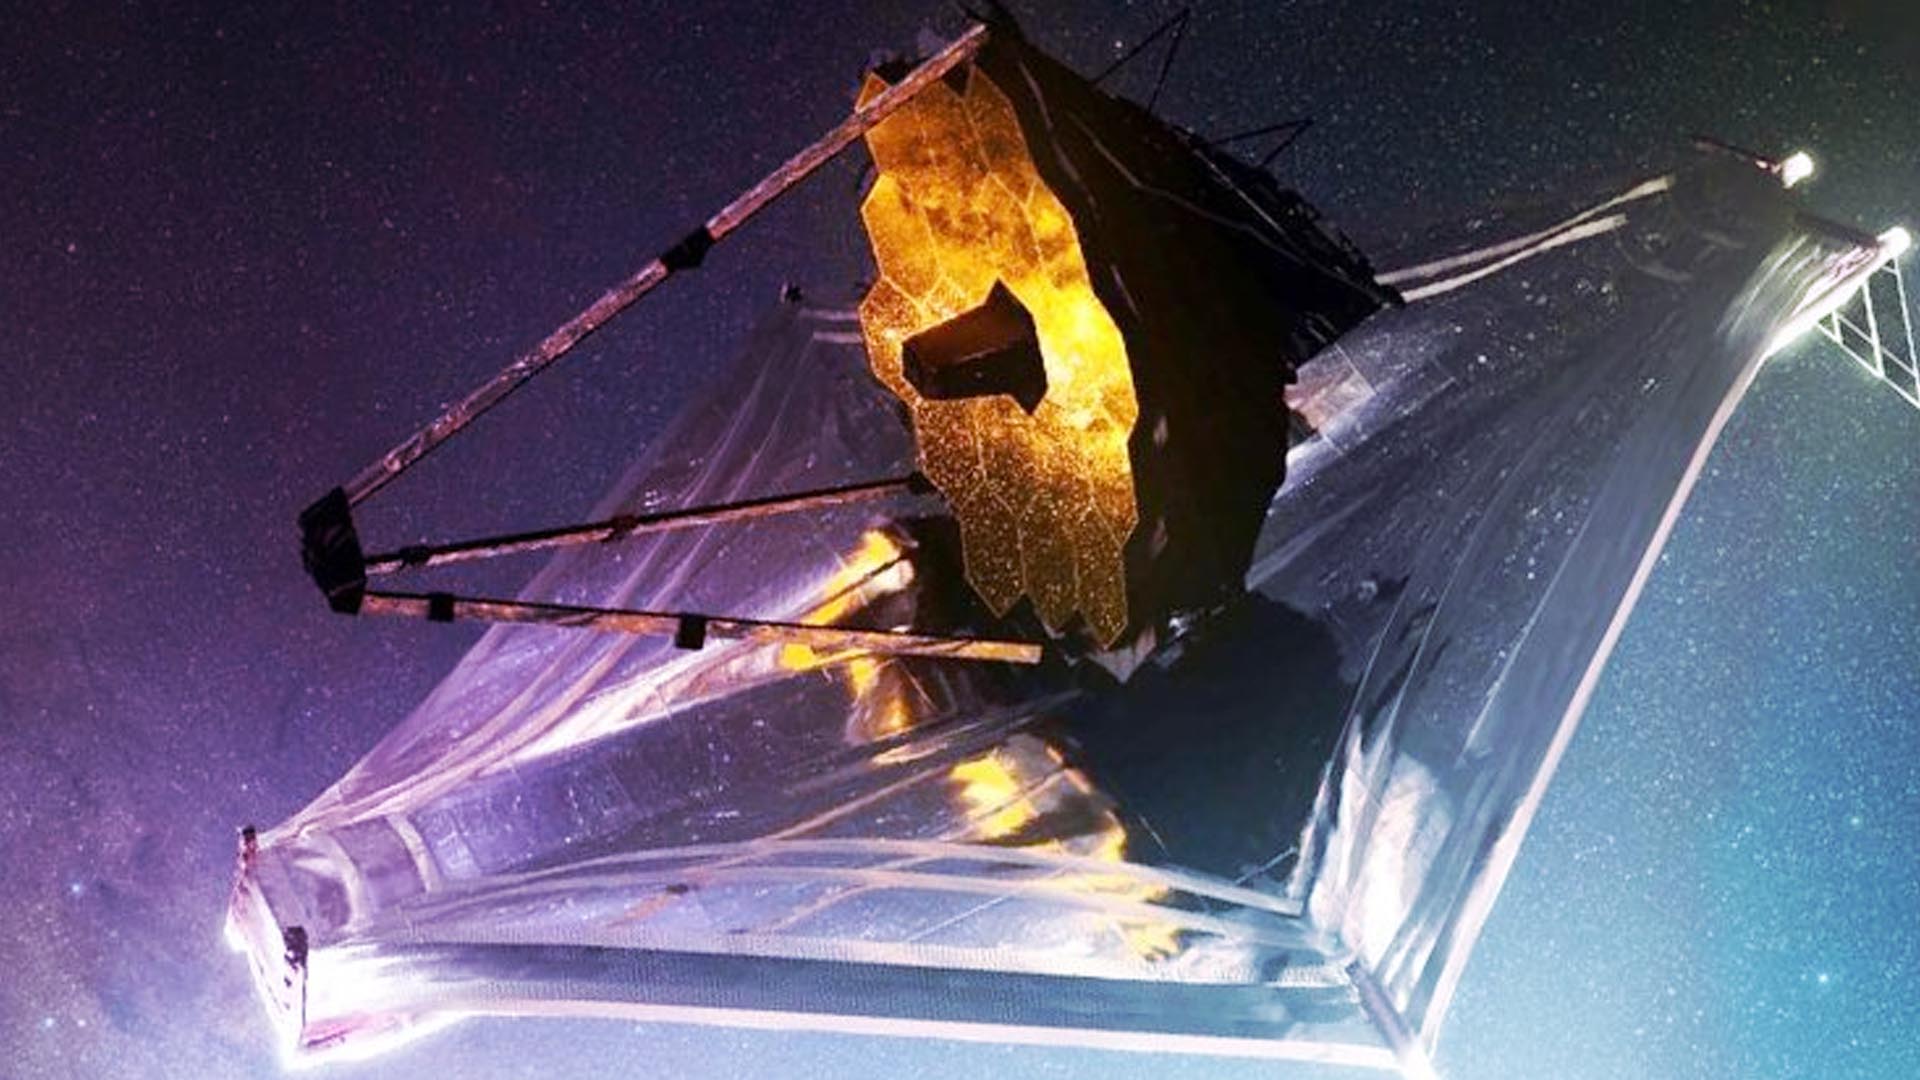 The James Webb Space Telescope from NASA